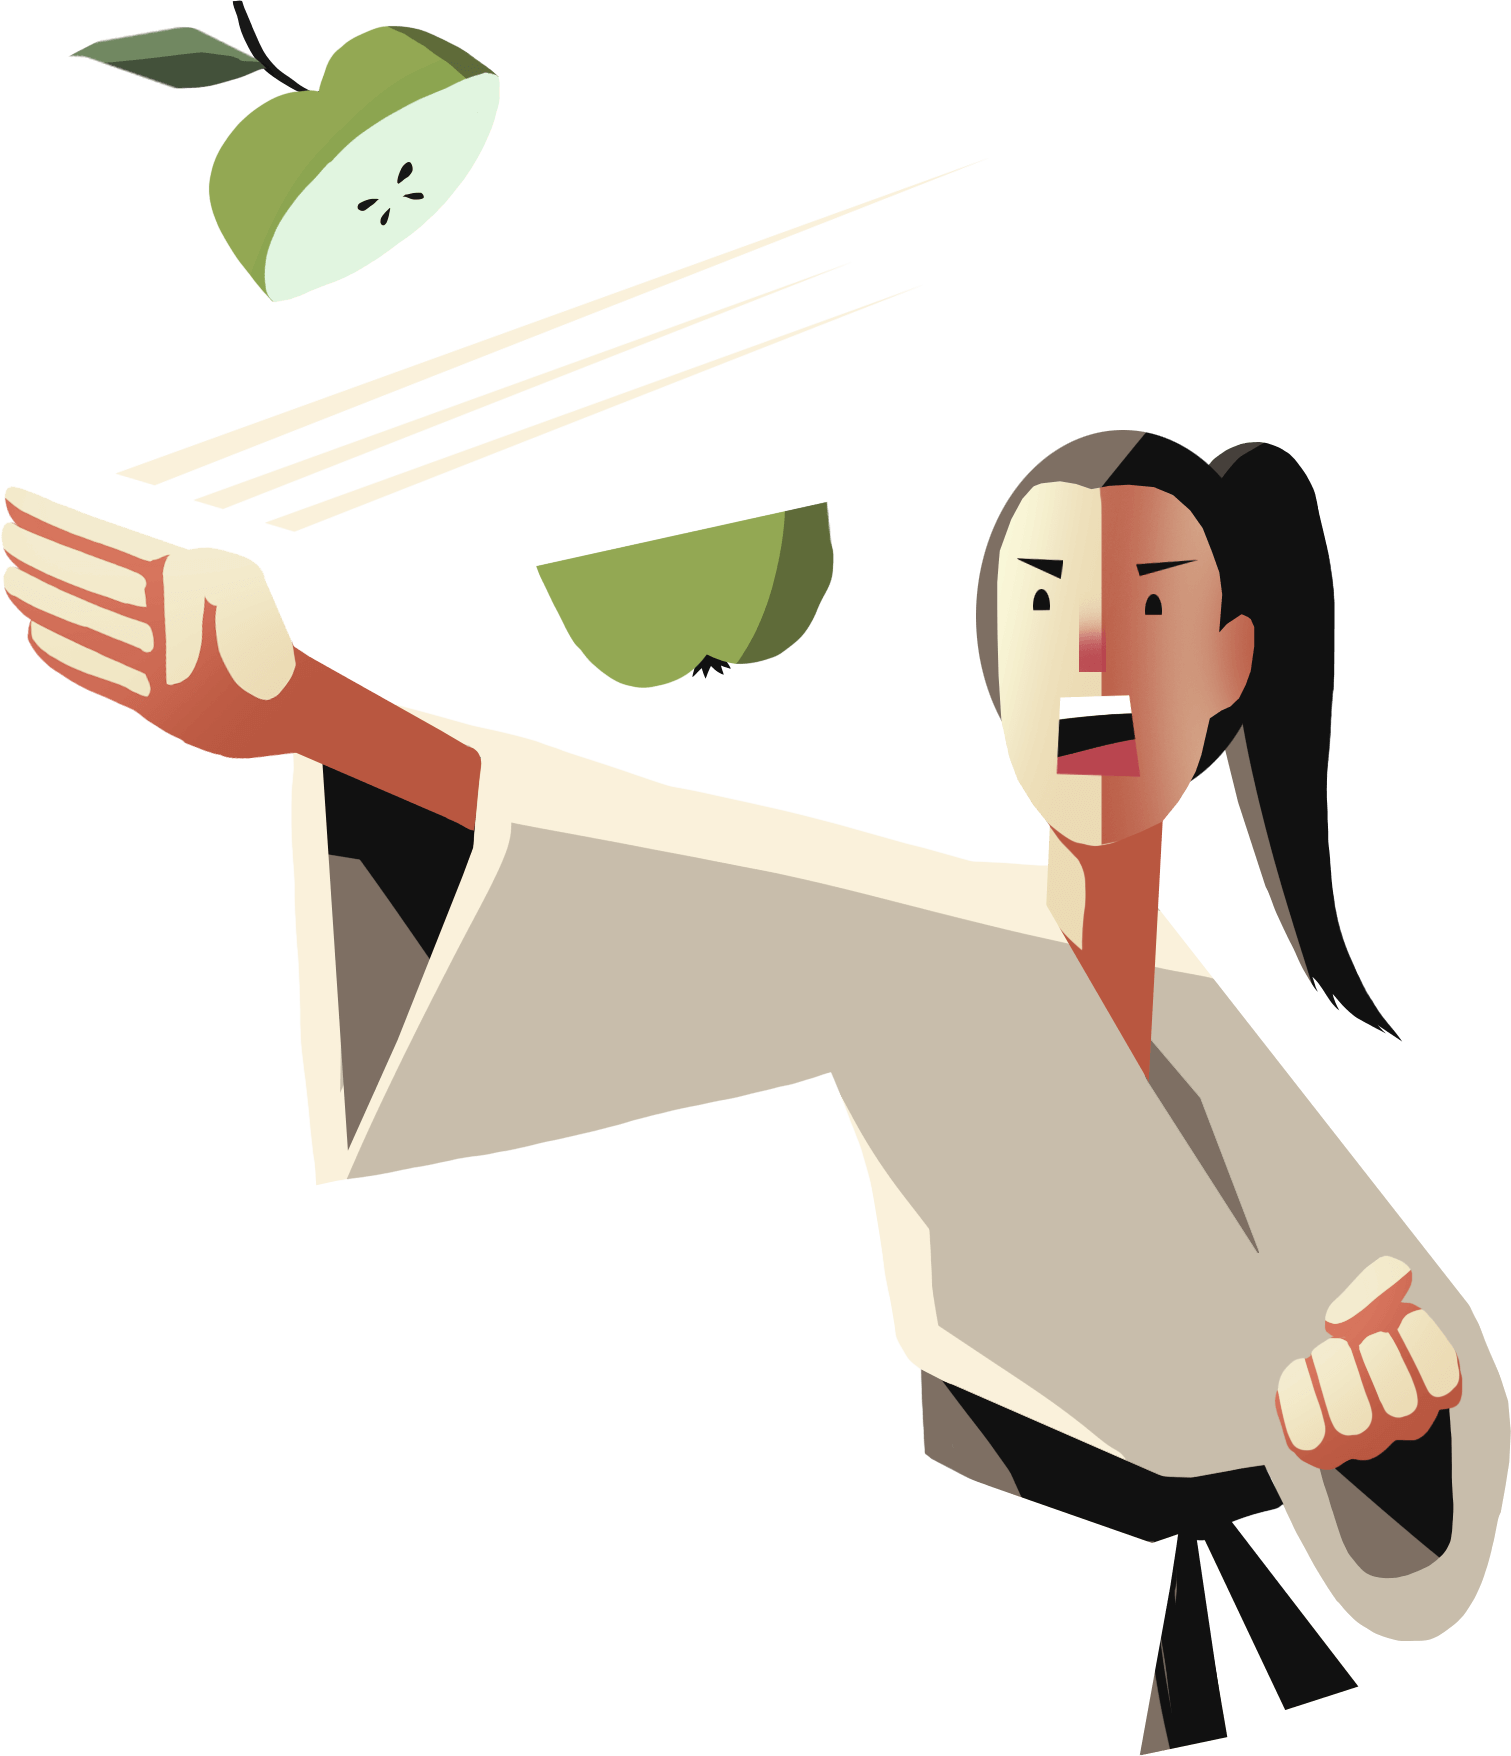 Hiya! A karate girl chopping an apple with her bare hands.